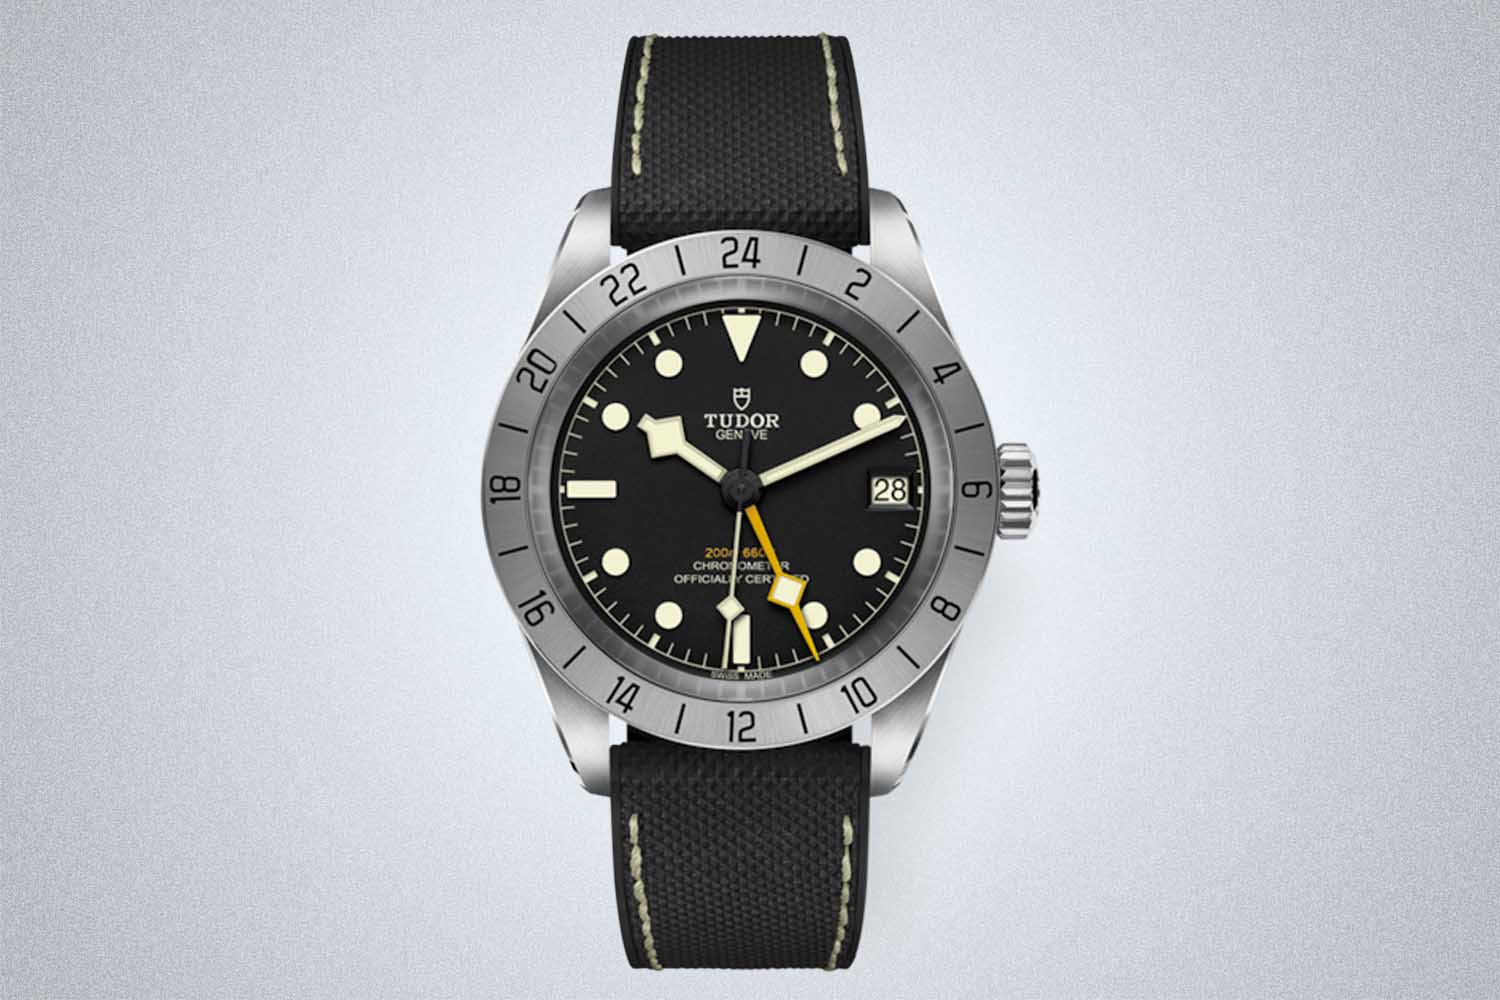 Tudor Black Bay Pro watch